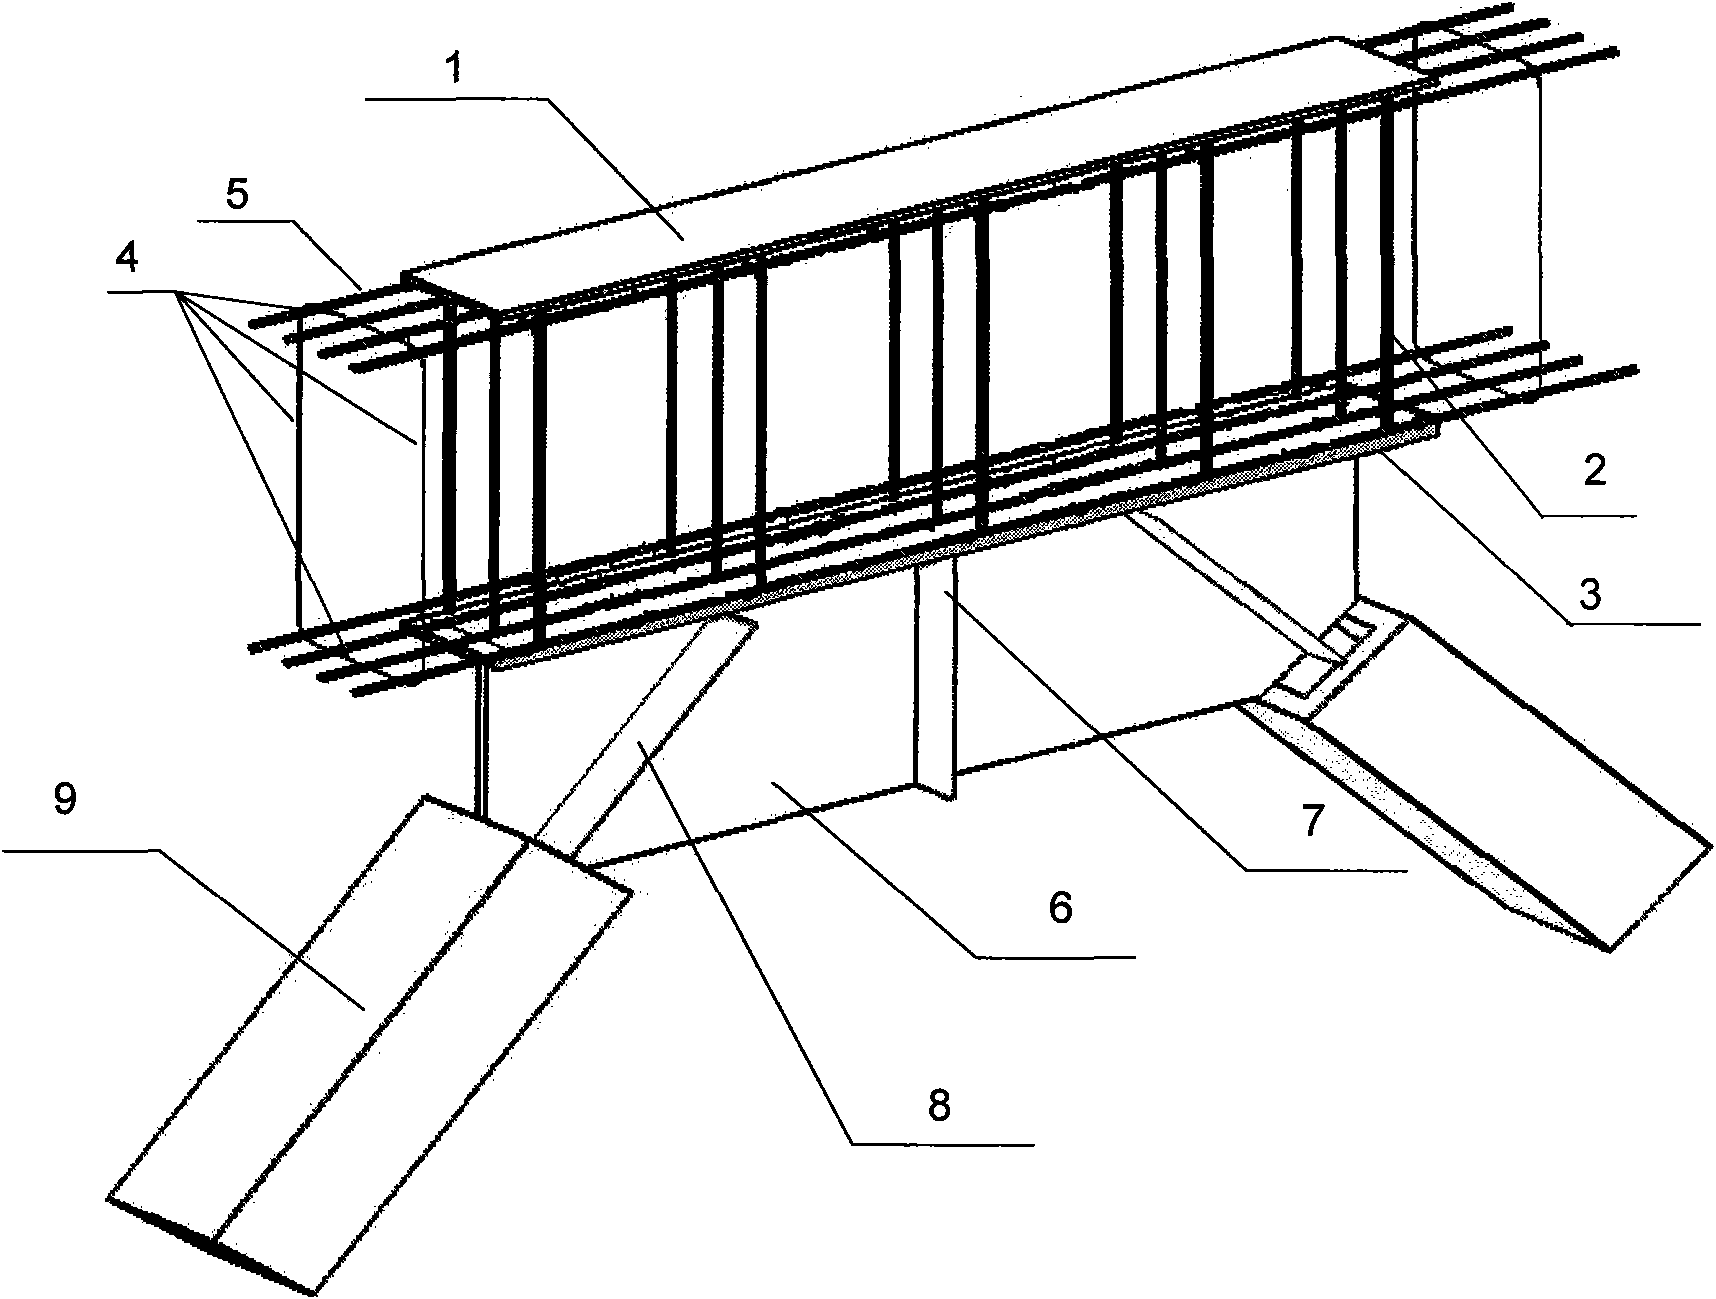 Vertical reinforced concrete component-connection node of buckling-restrained brace